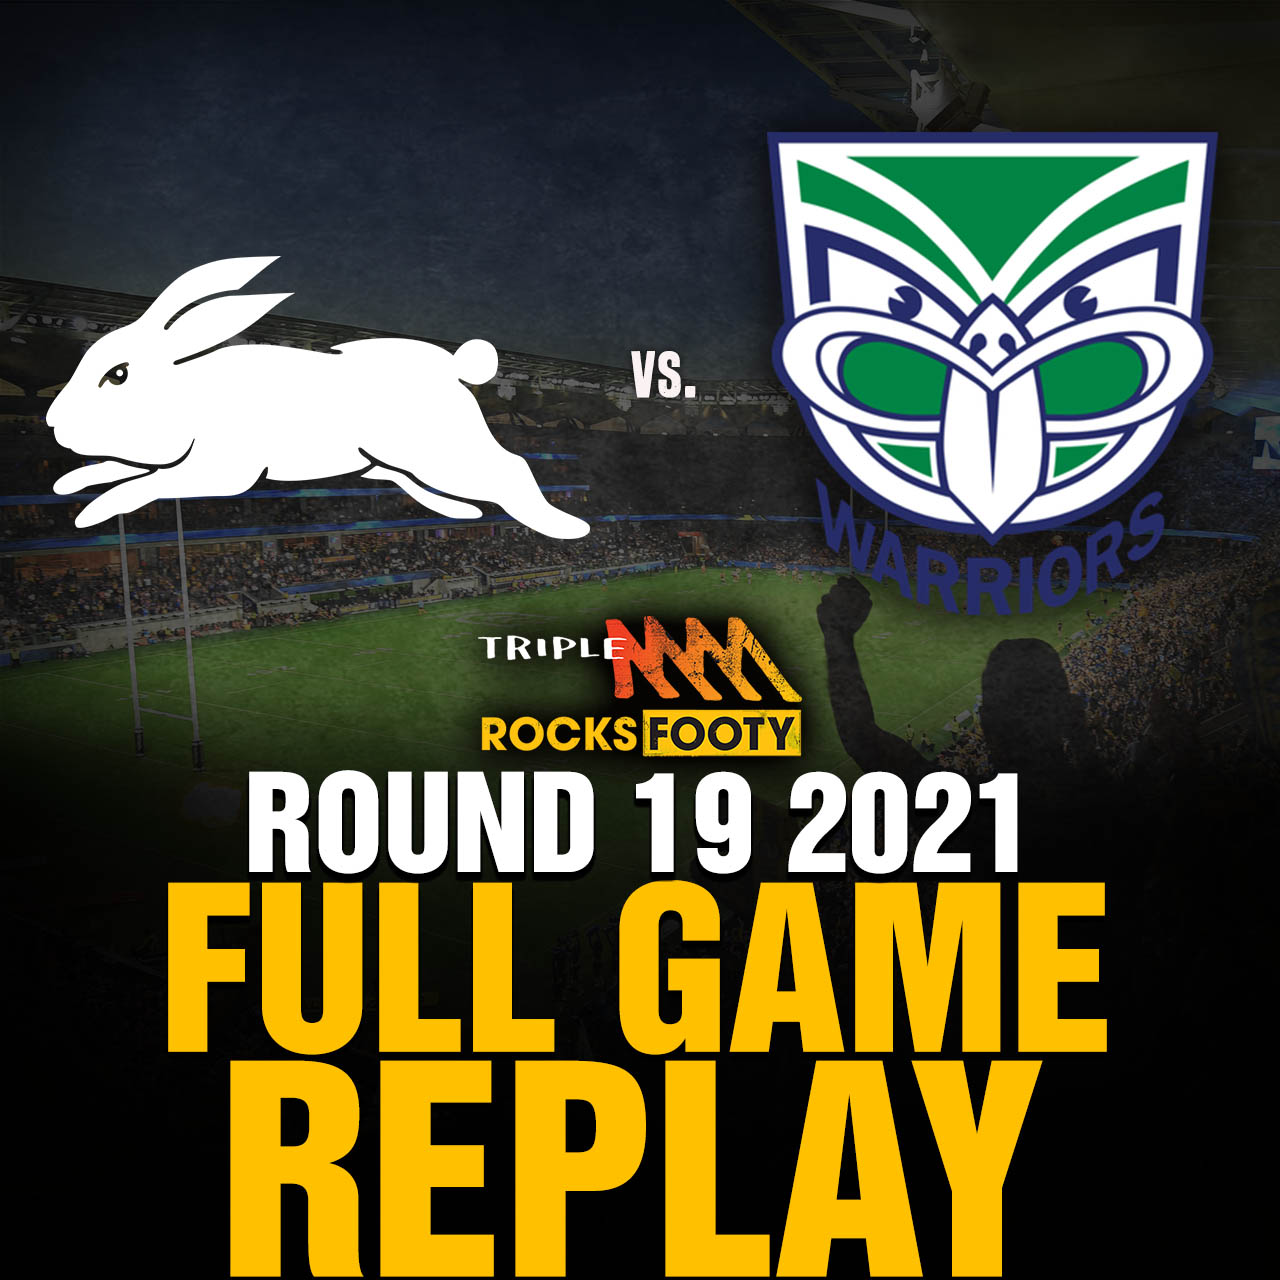 FULL GAME REPLAY | South Sydney Rabbitohs vs. New Zealand Warriors